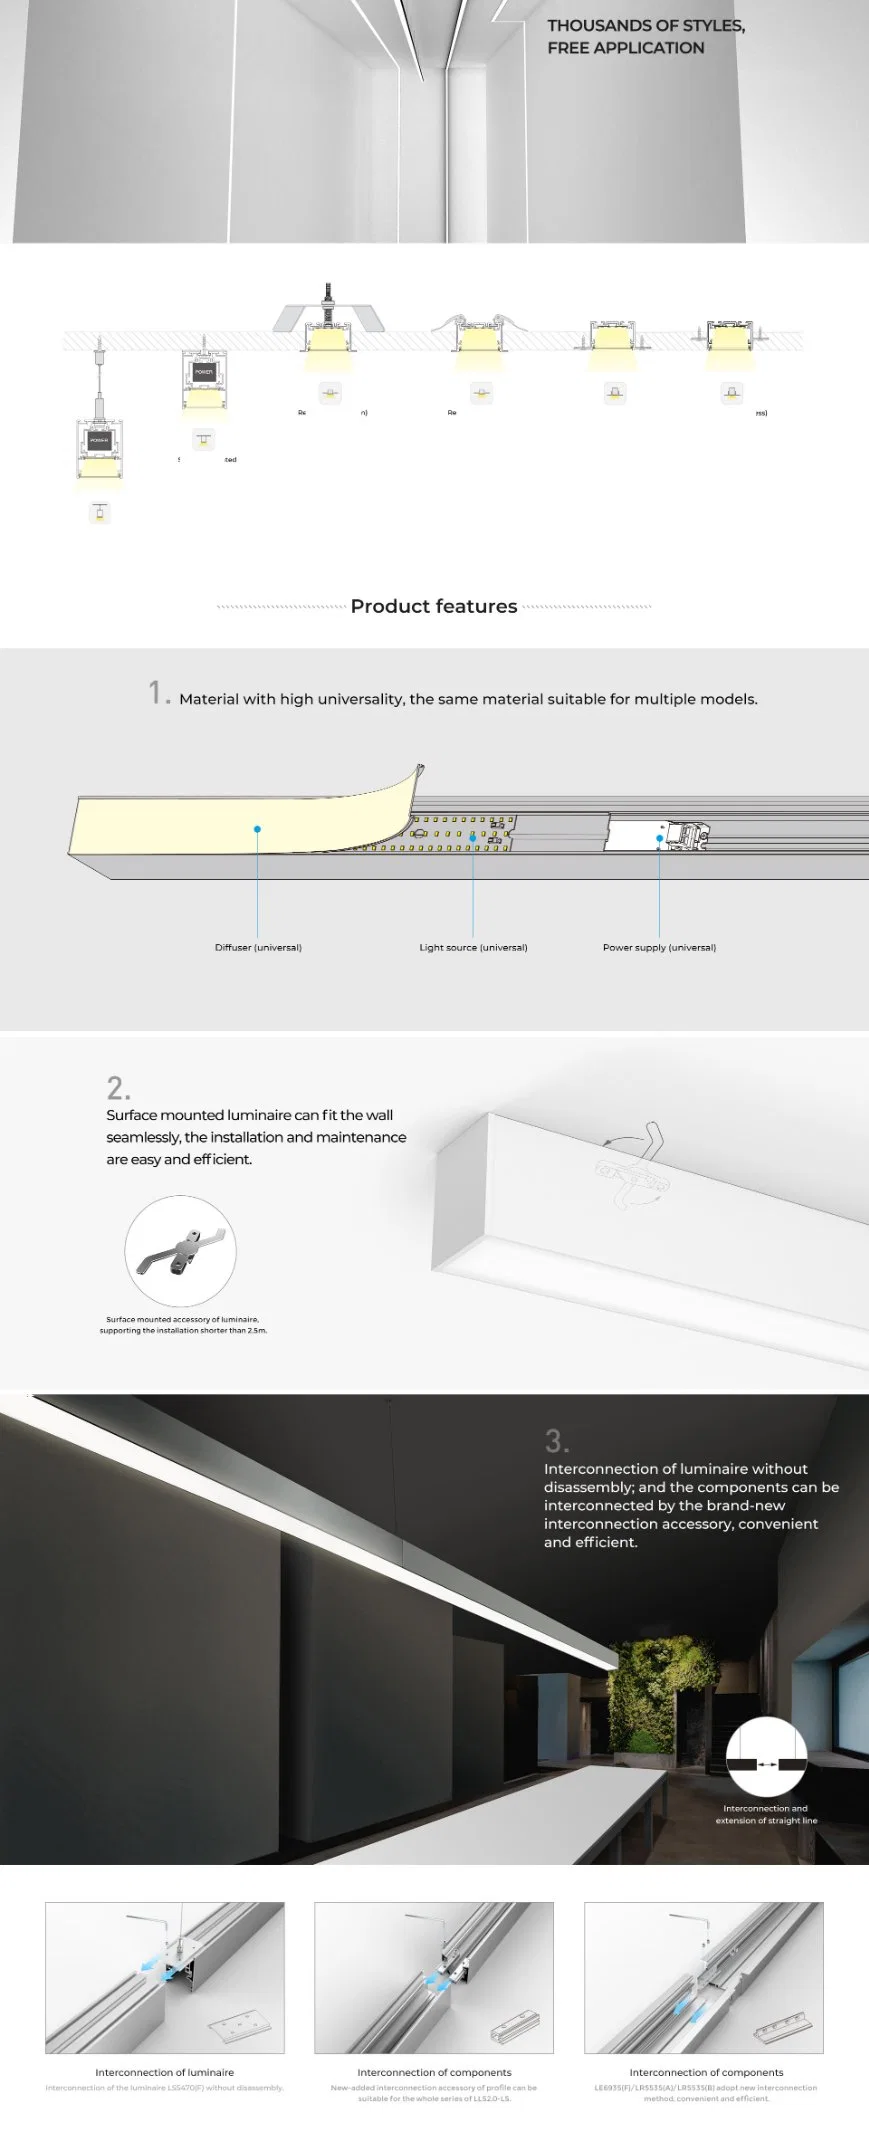 Decorative Chandelier Linkable Rigid Recessed Profile Lamp LED Linear Light